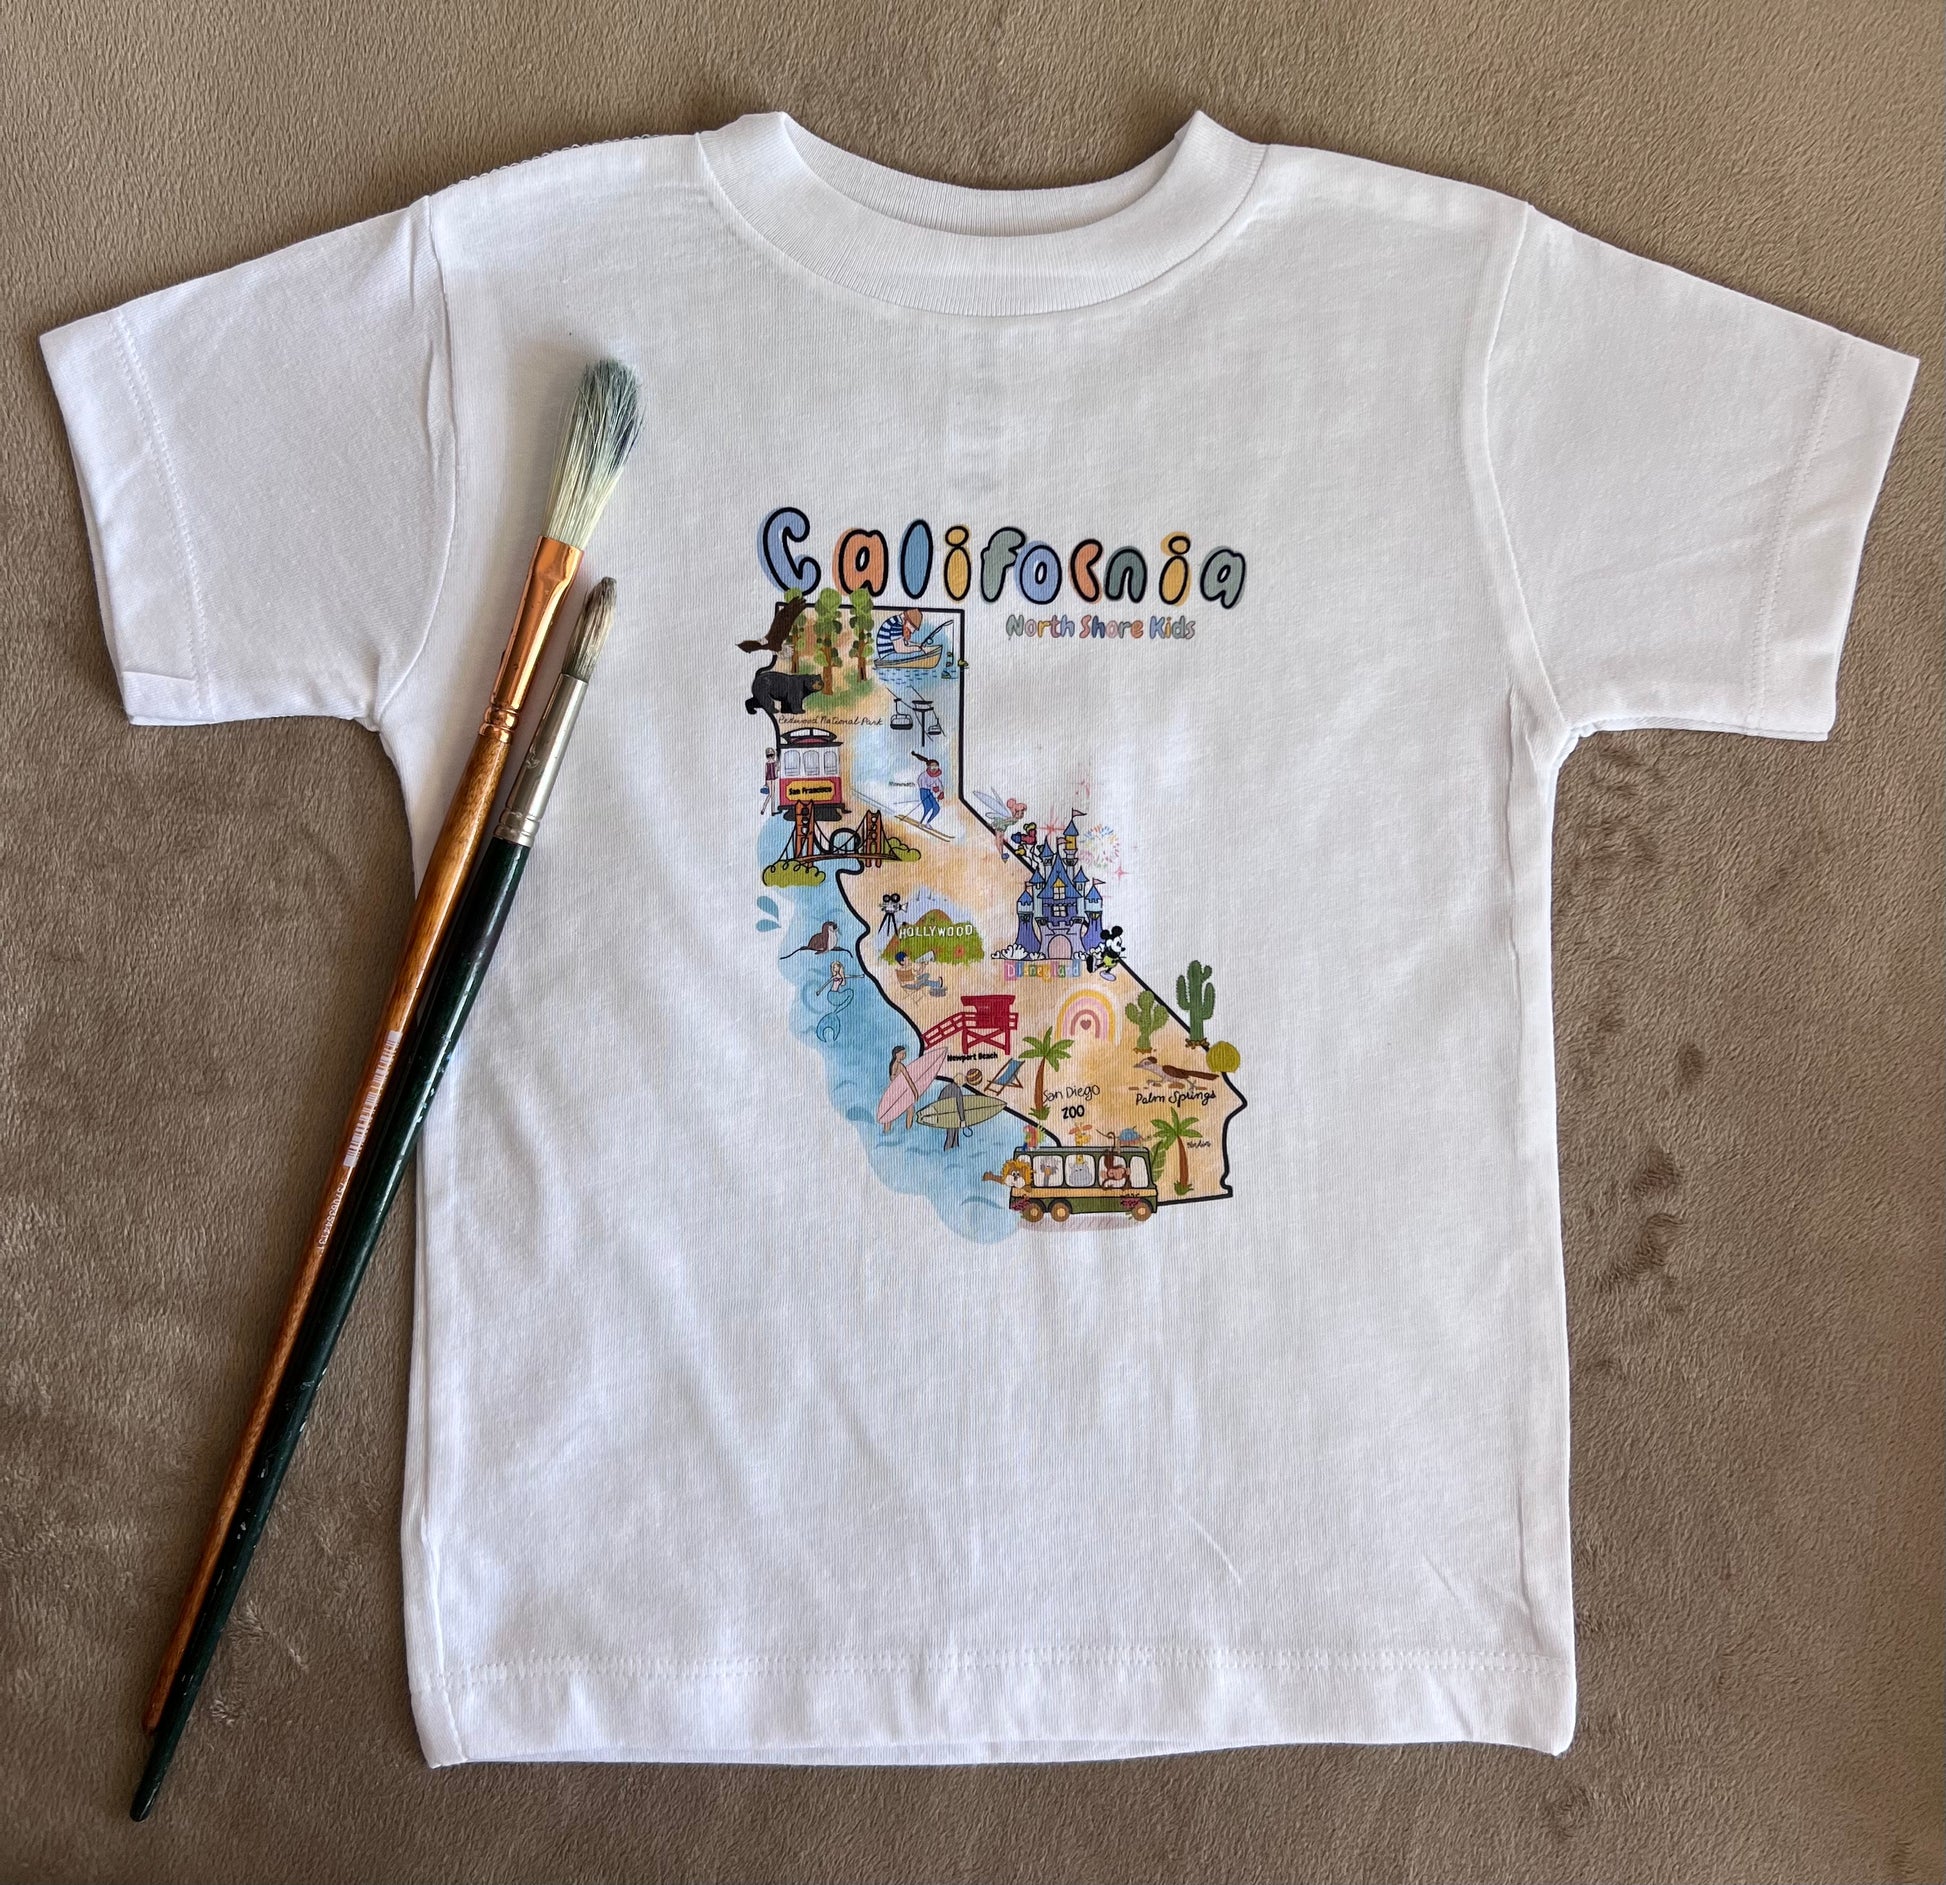 North Shore Girls and Kids California Map handmade illustrated t-shirt for kids